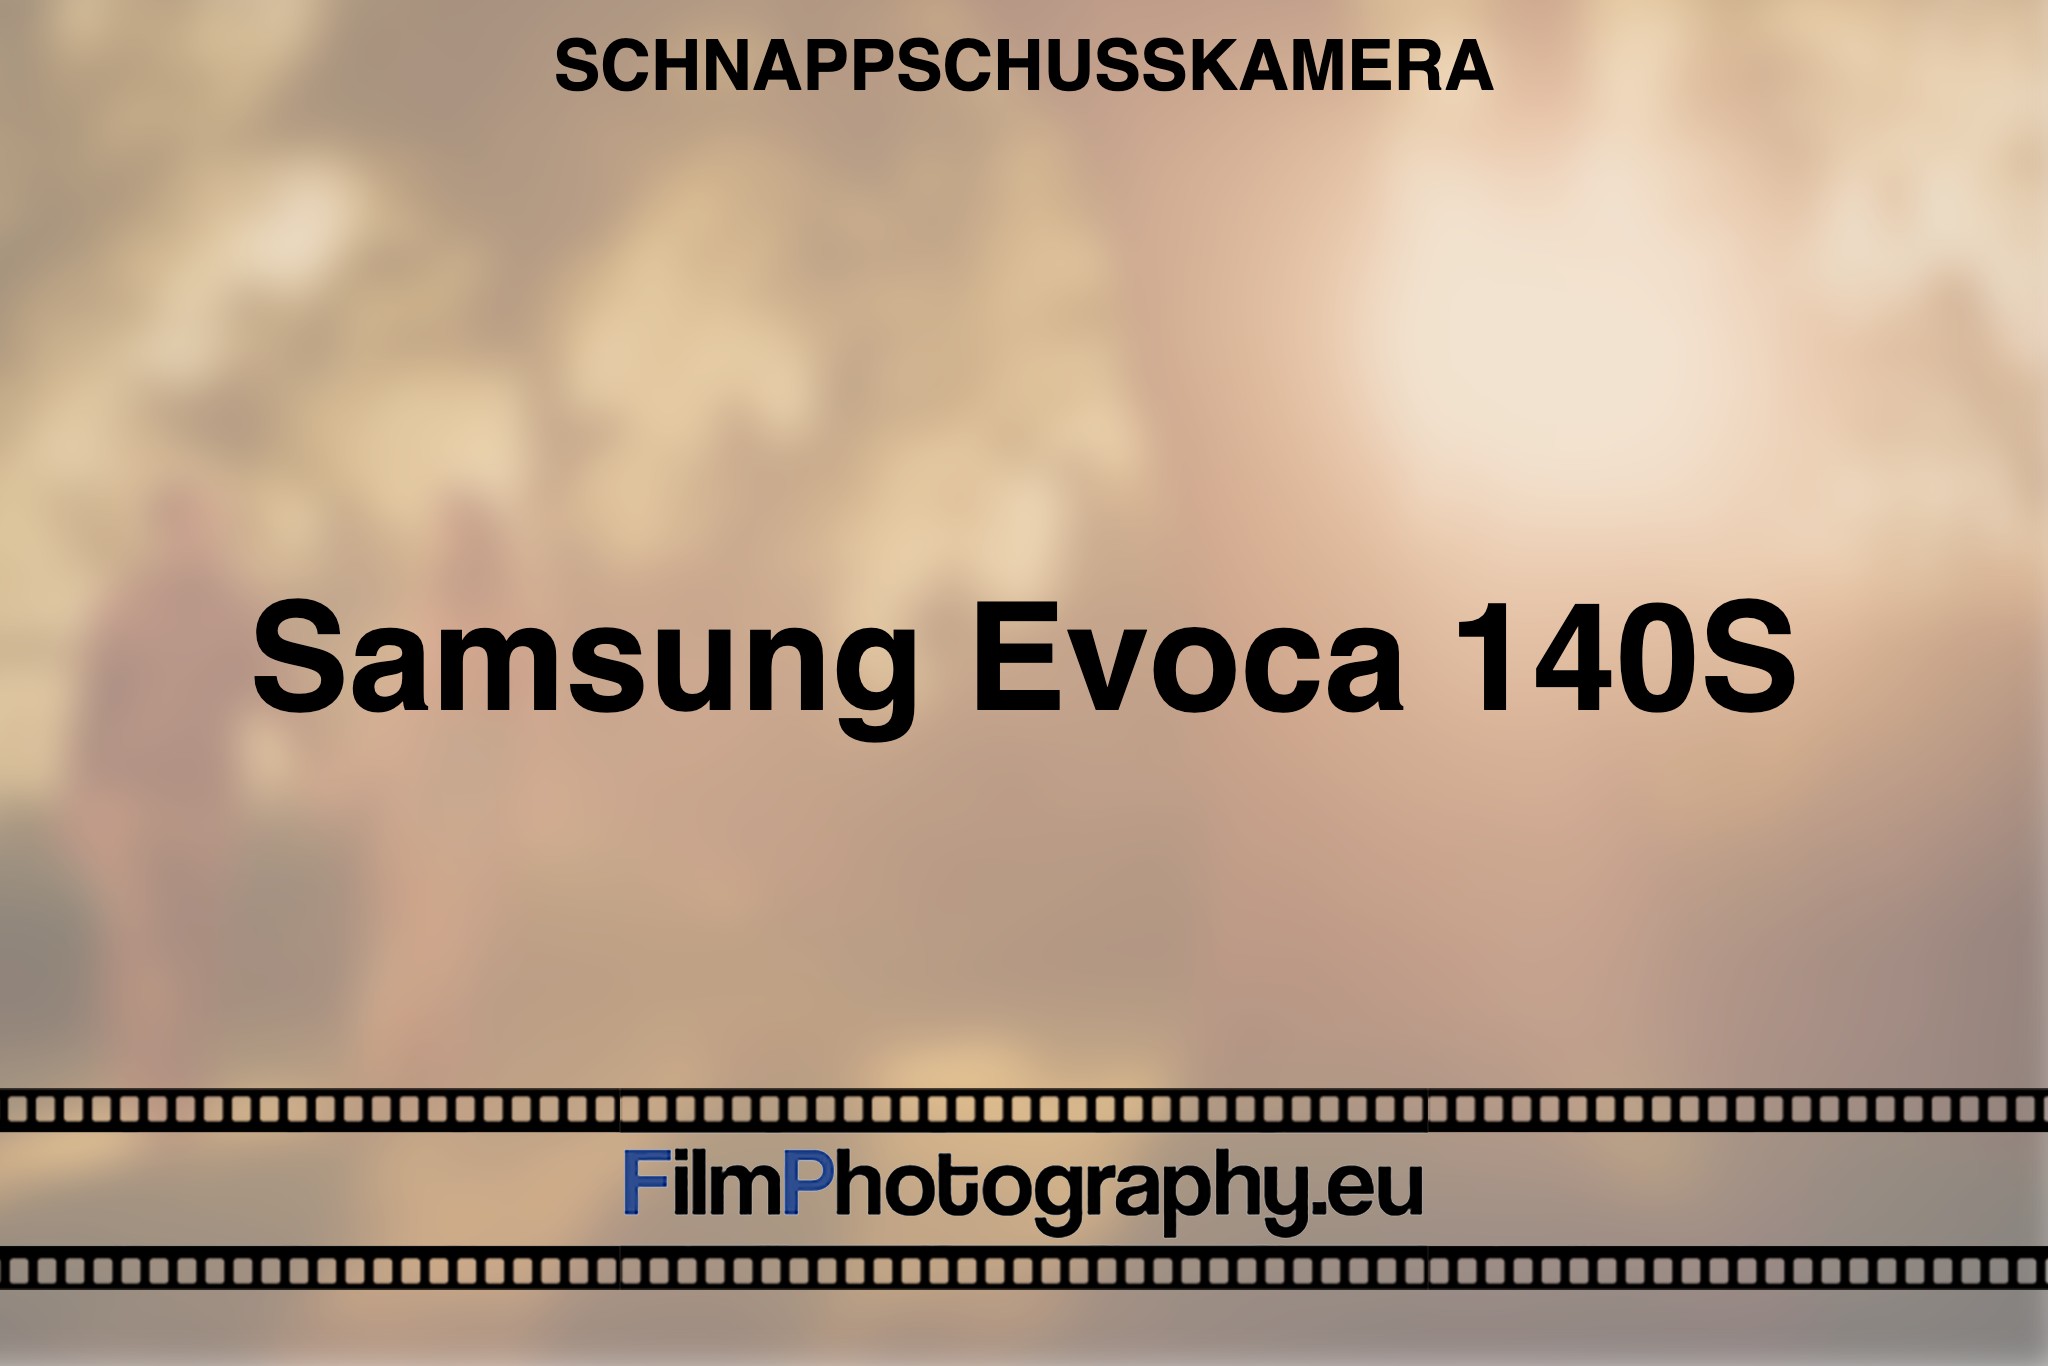 samsung-evoca-140s-schnappschusskamera-bnv